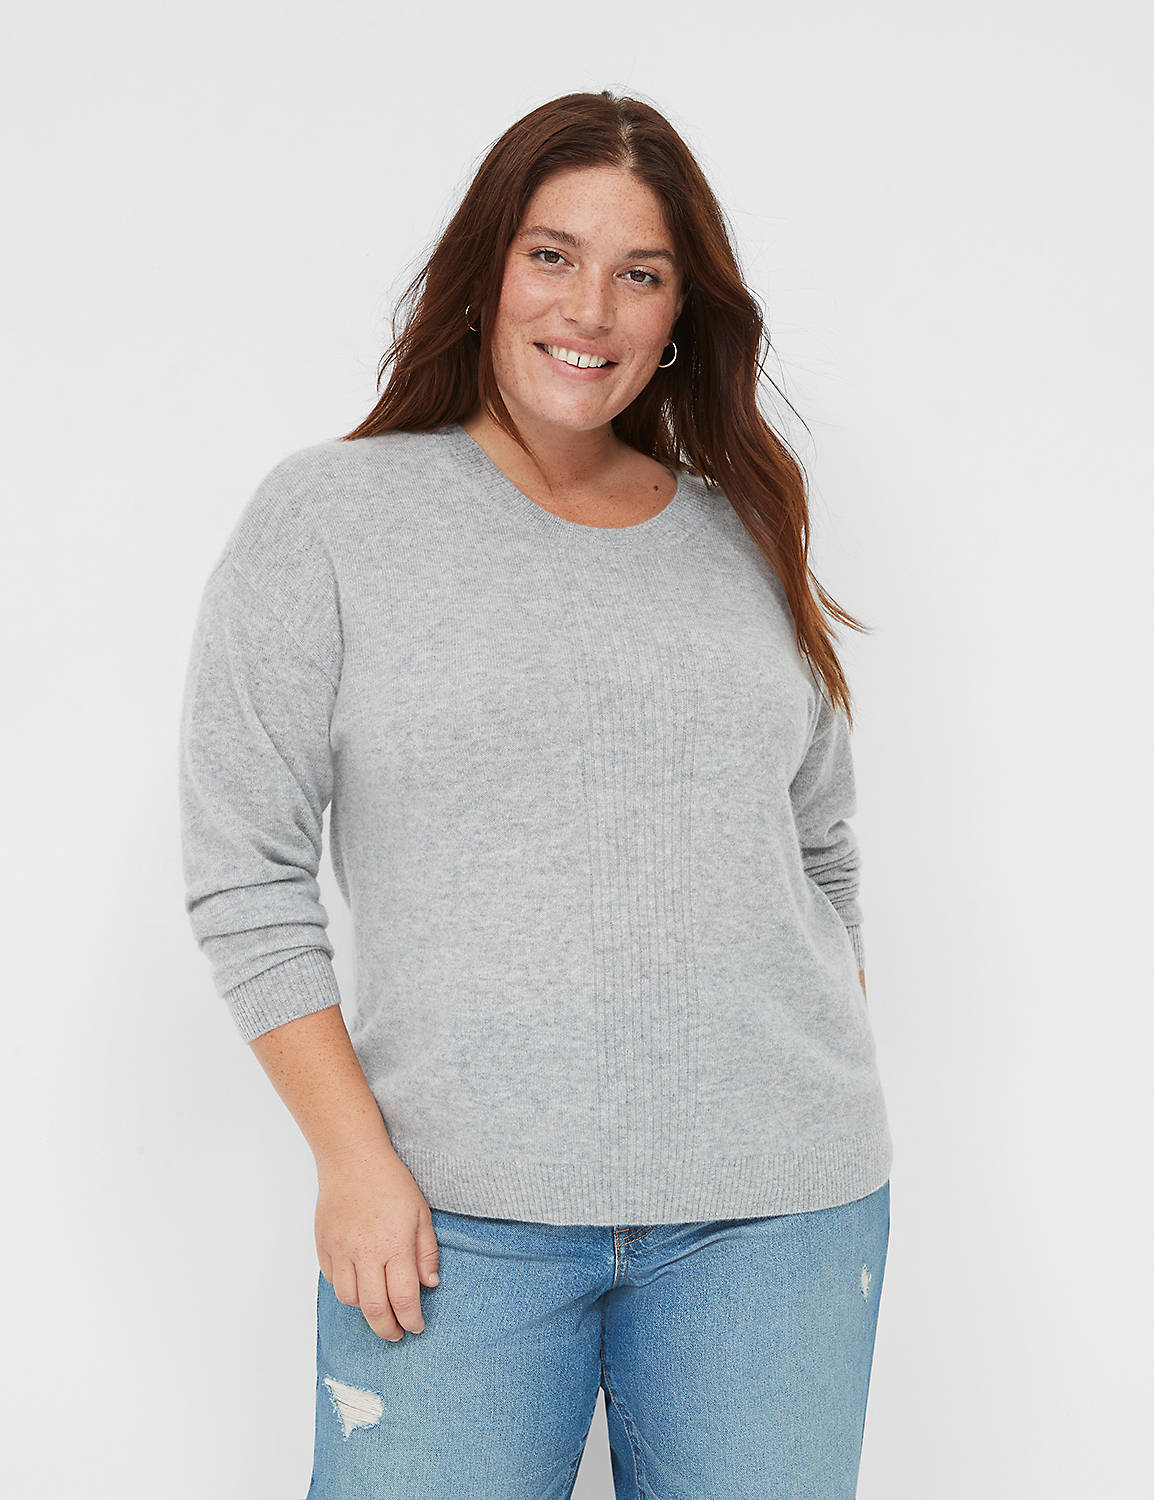 lane bryant long-sleeve cashmere sweater 22/24 light grey